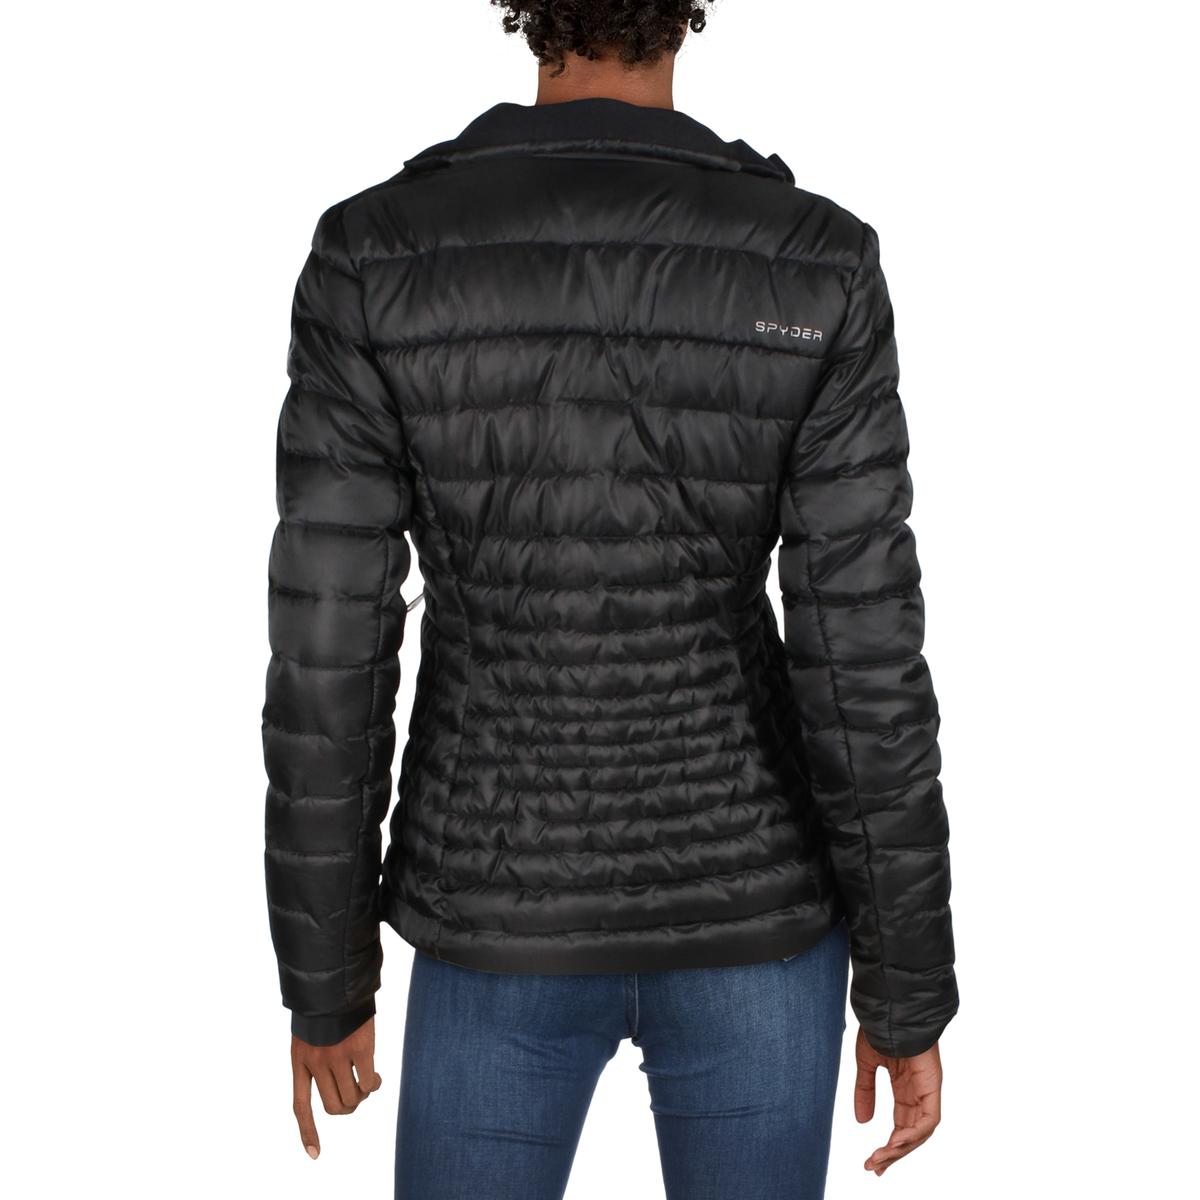 Spyder Womens Edyn Insulated Active C Jacket Coat BHFO 0119 | eBay